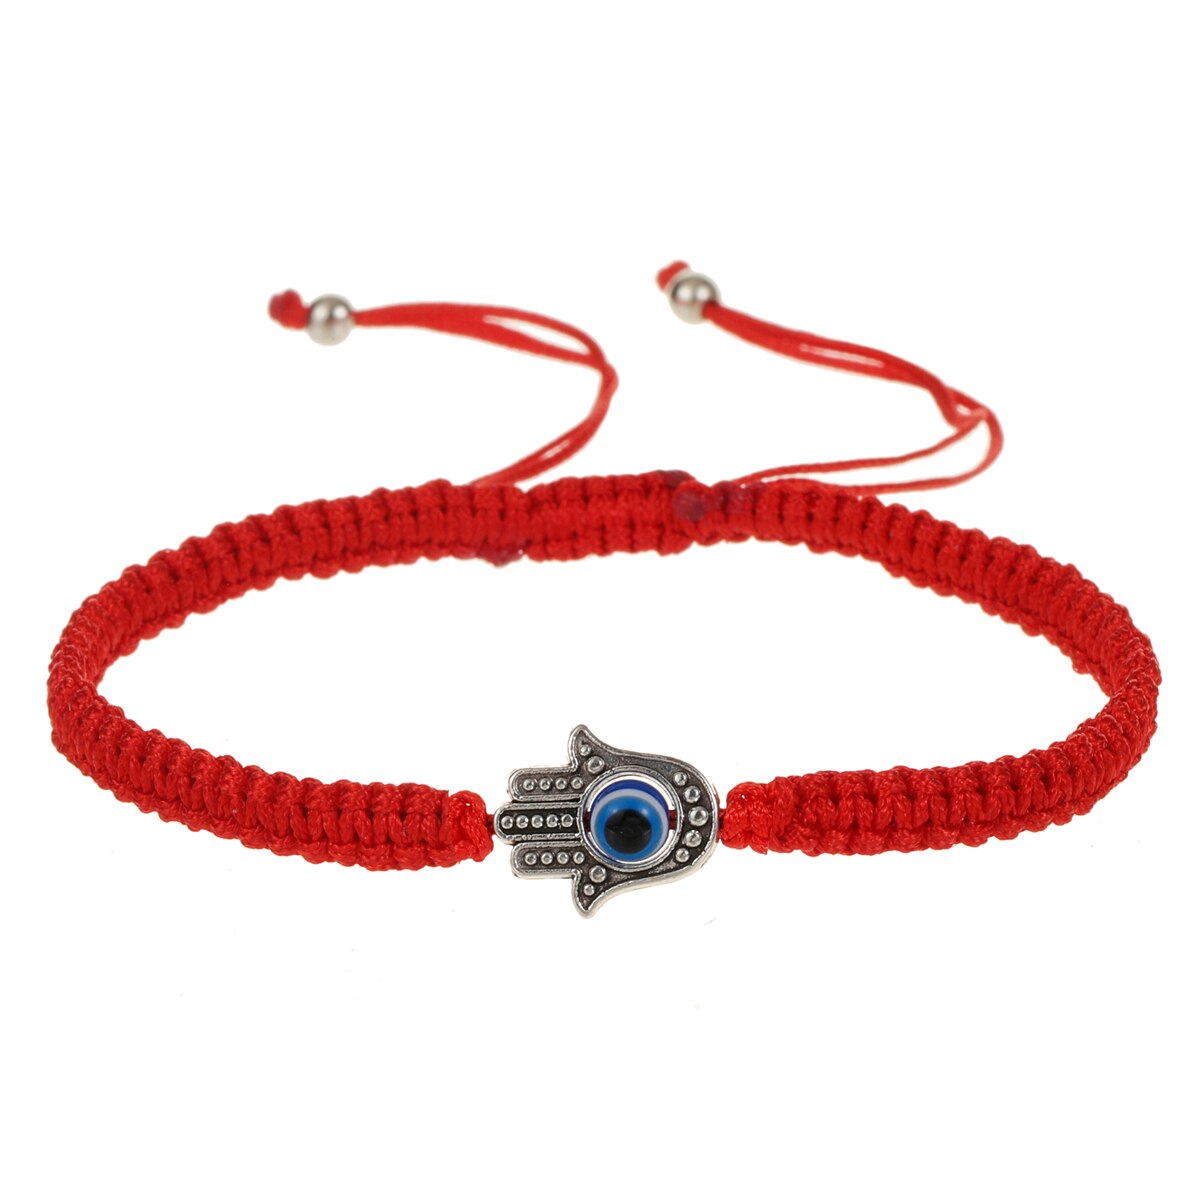 Fashion Fatima Hand Pendant Red Rope Chain Bracelet Handmade Braided Owl Turtle Charm Bracelets for Women Girl Cuff Yoga Jewelry